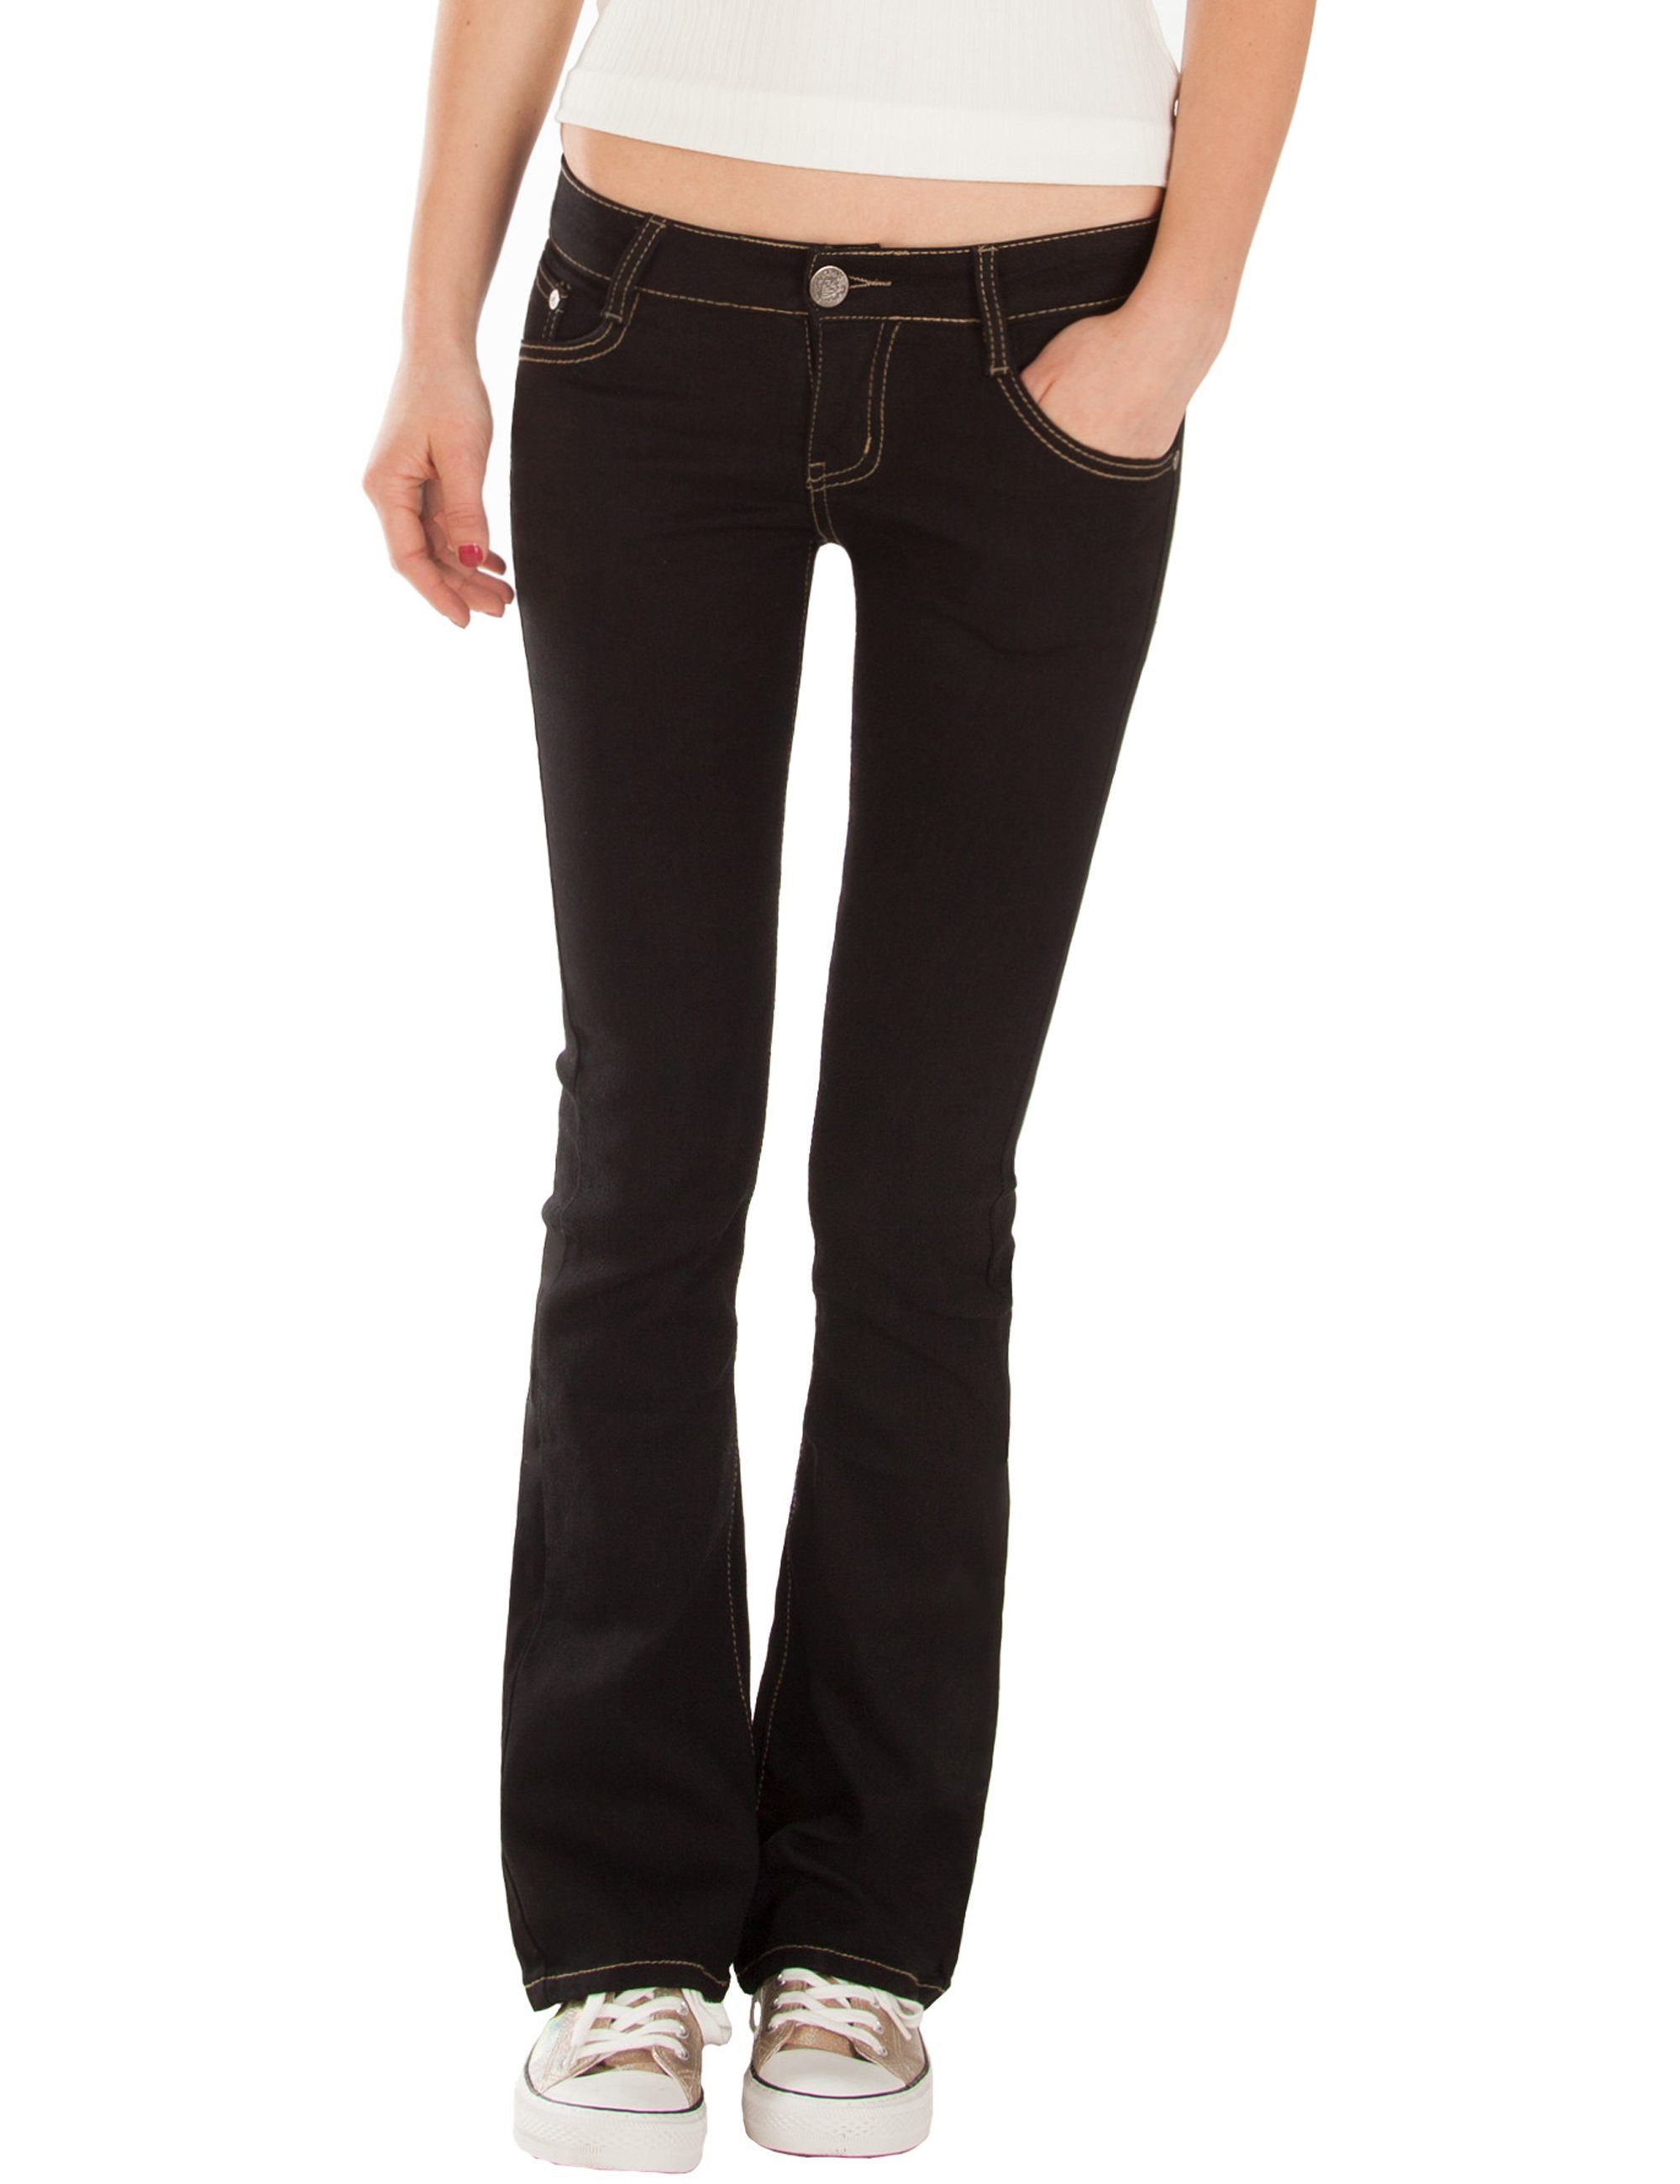 Fraternel Bootcut-Jeans Schwarz 5-Pocket-Style Waist, Stretch, Low